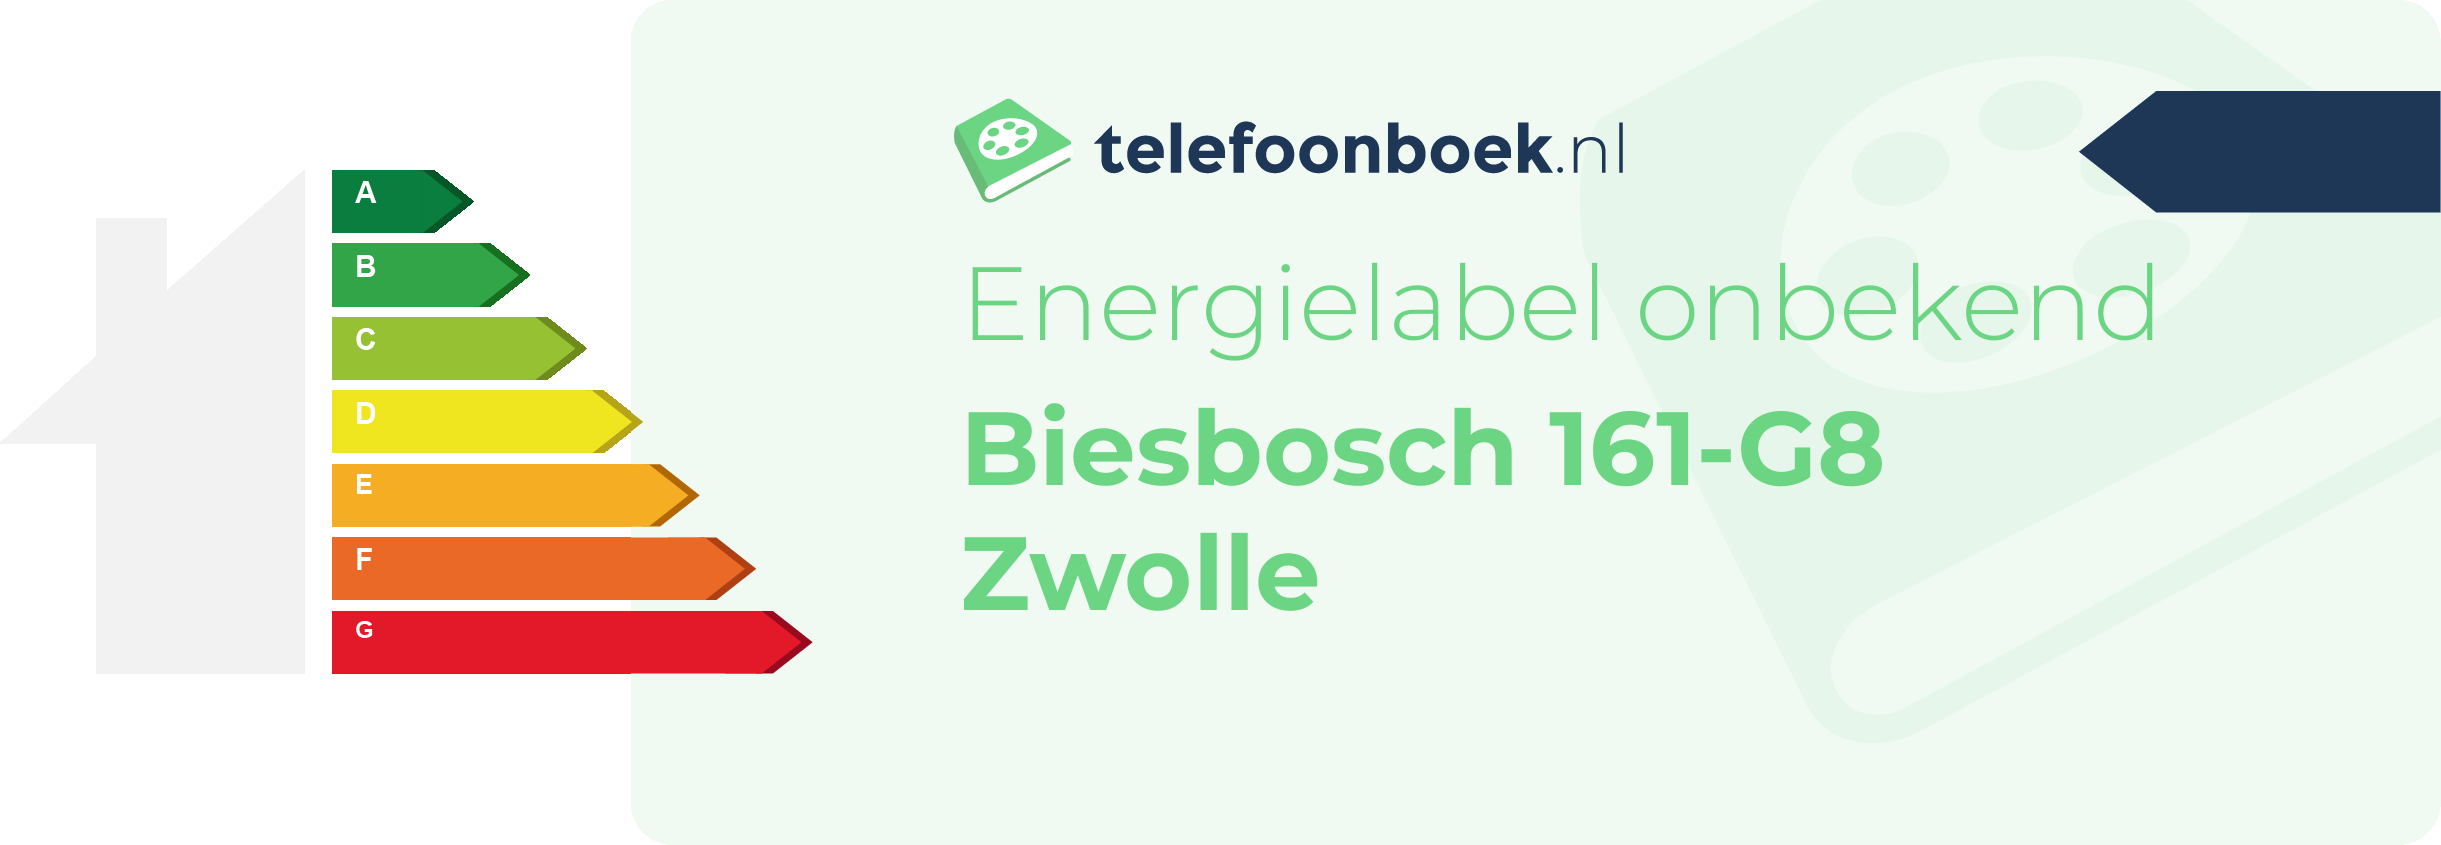 Energielabel Biesbosch 161-G8 Zwolle